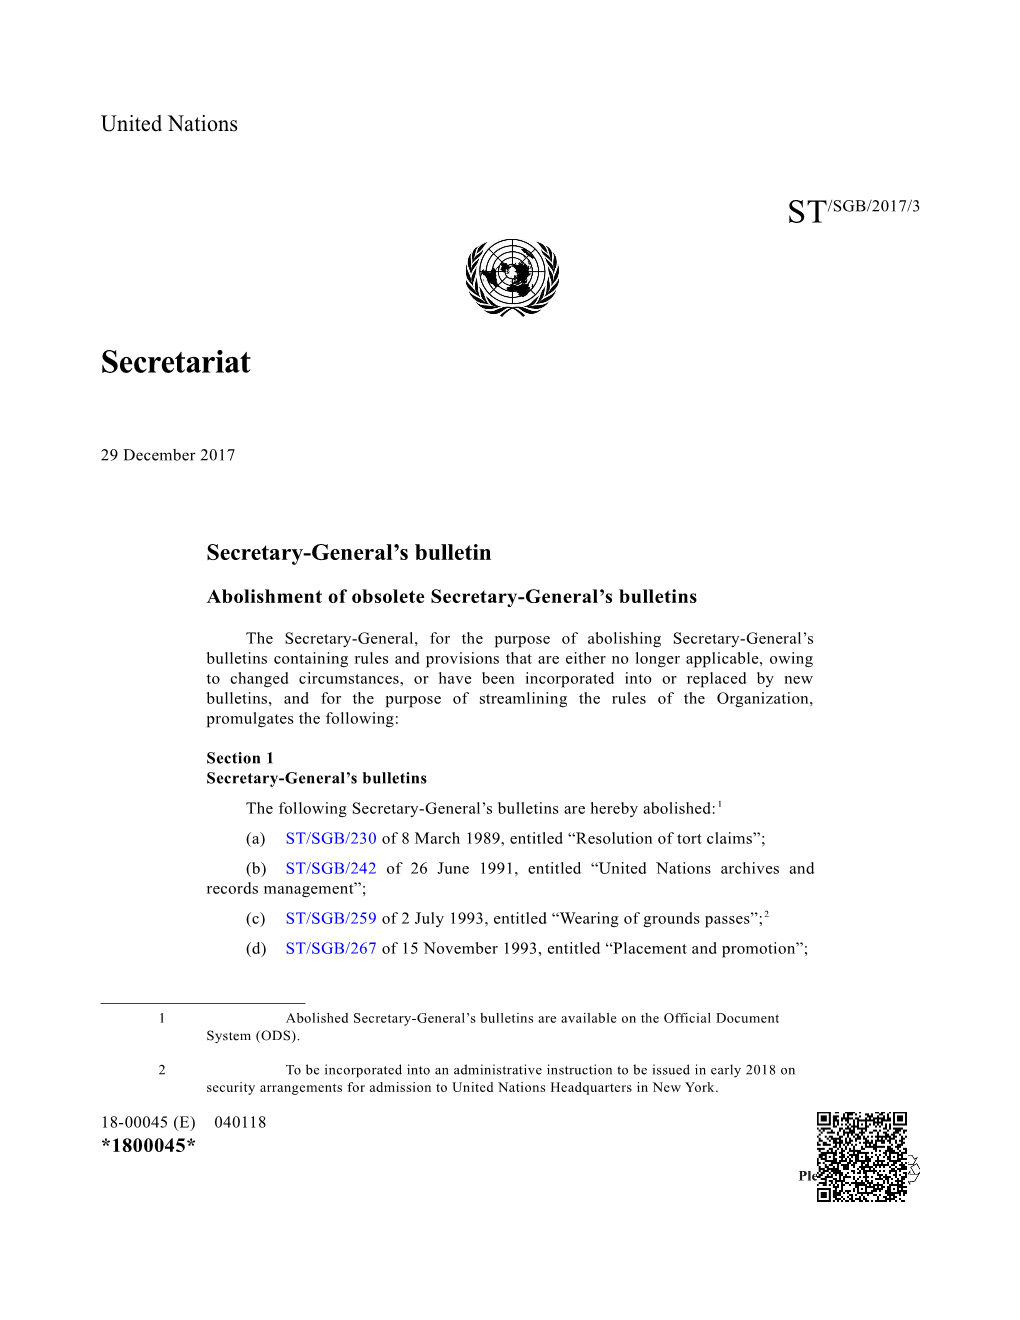 Abolishment of Obsolete Secretary-General S Bulletins